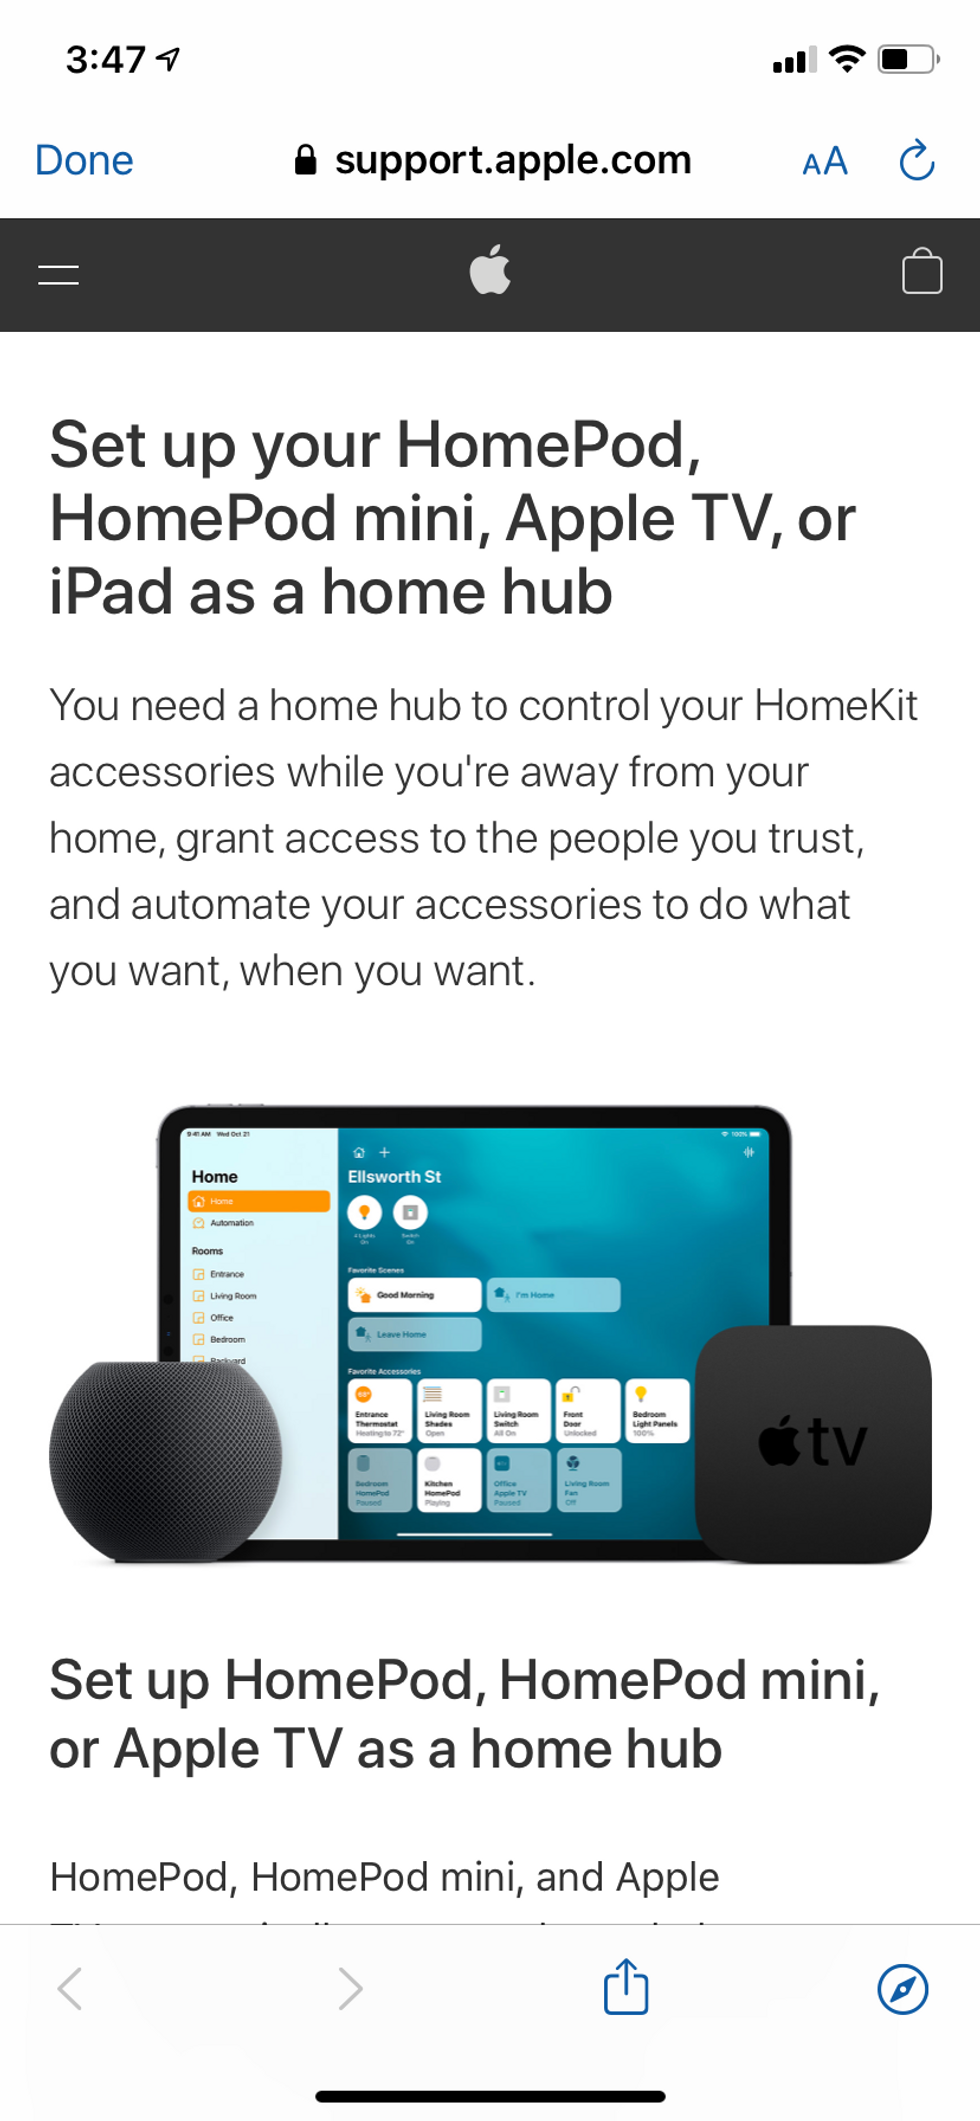 Setup page using HomePod or Apple as home hub.